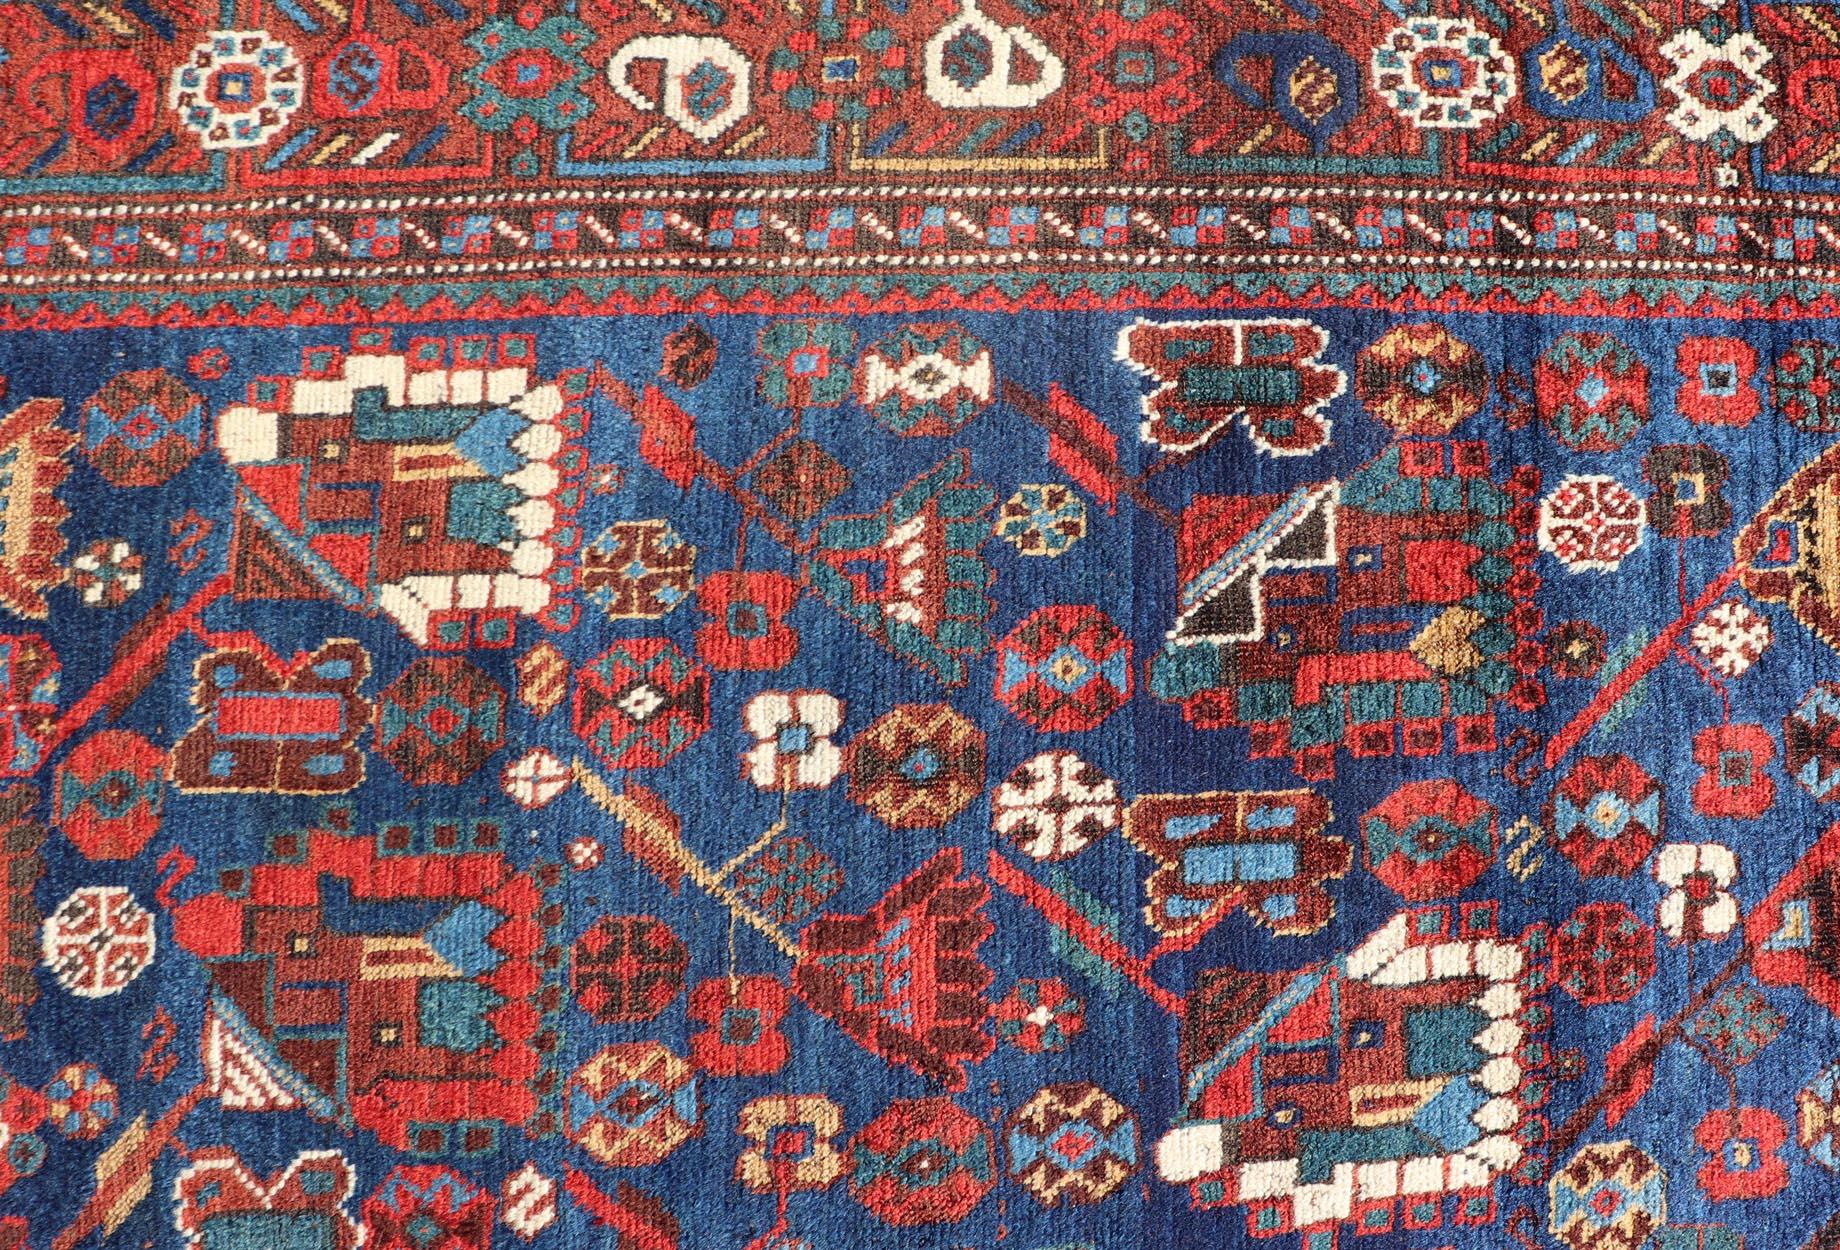 Antique Persian Qashqai Shiraz Tribal Rug with Tribal Design in jewel tones with blue background. Keivan Woven Arts / rug EMB-9687-P13529, country of origin / type: Iran / Qashqai, circa 1900. 

Measures: 6'0 x 9'0.